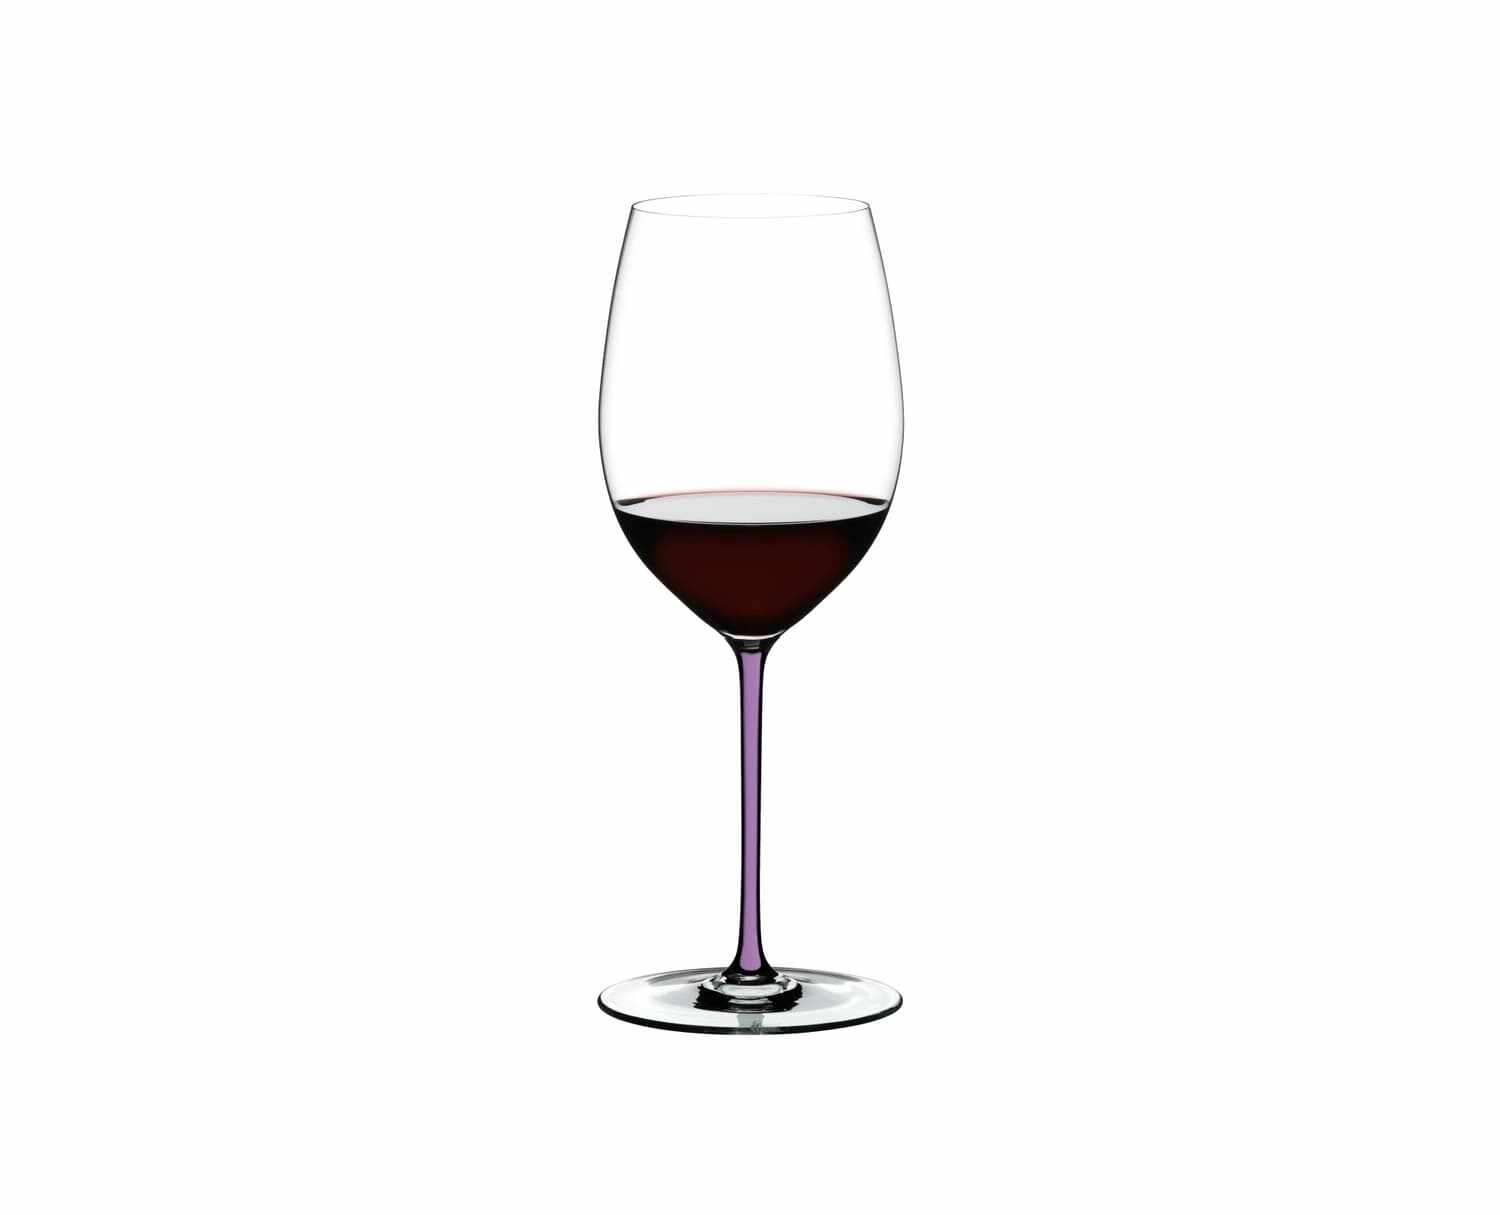 Pahar pentru vin, din cristal Fatto A Mano Cabernet / Merlot Violet, 625 ml, Riedel